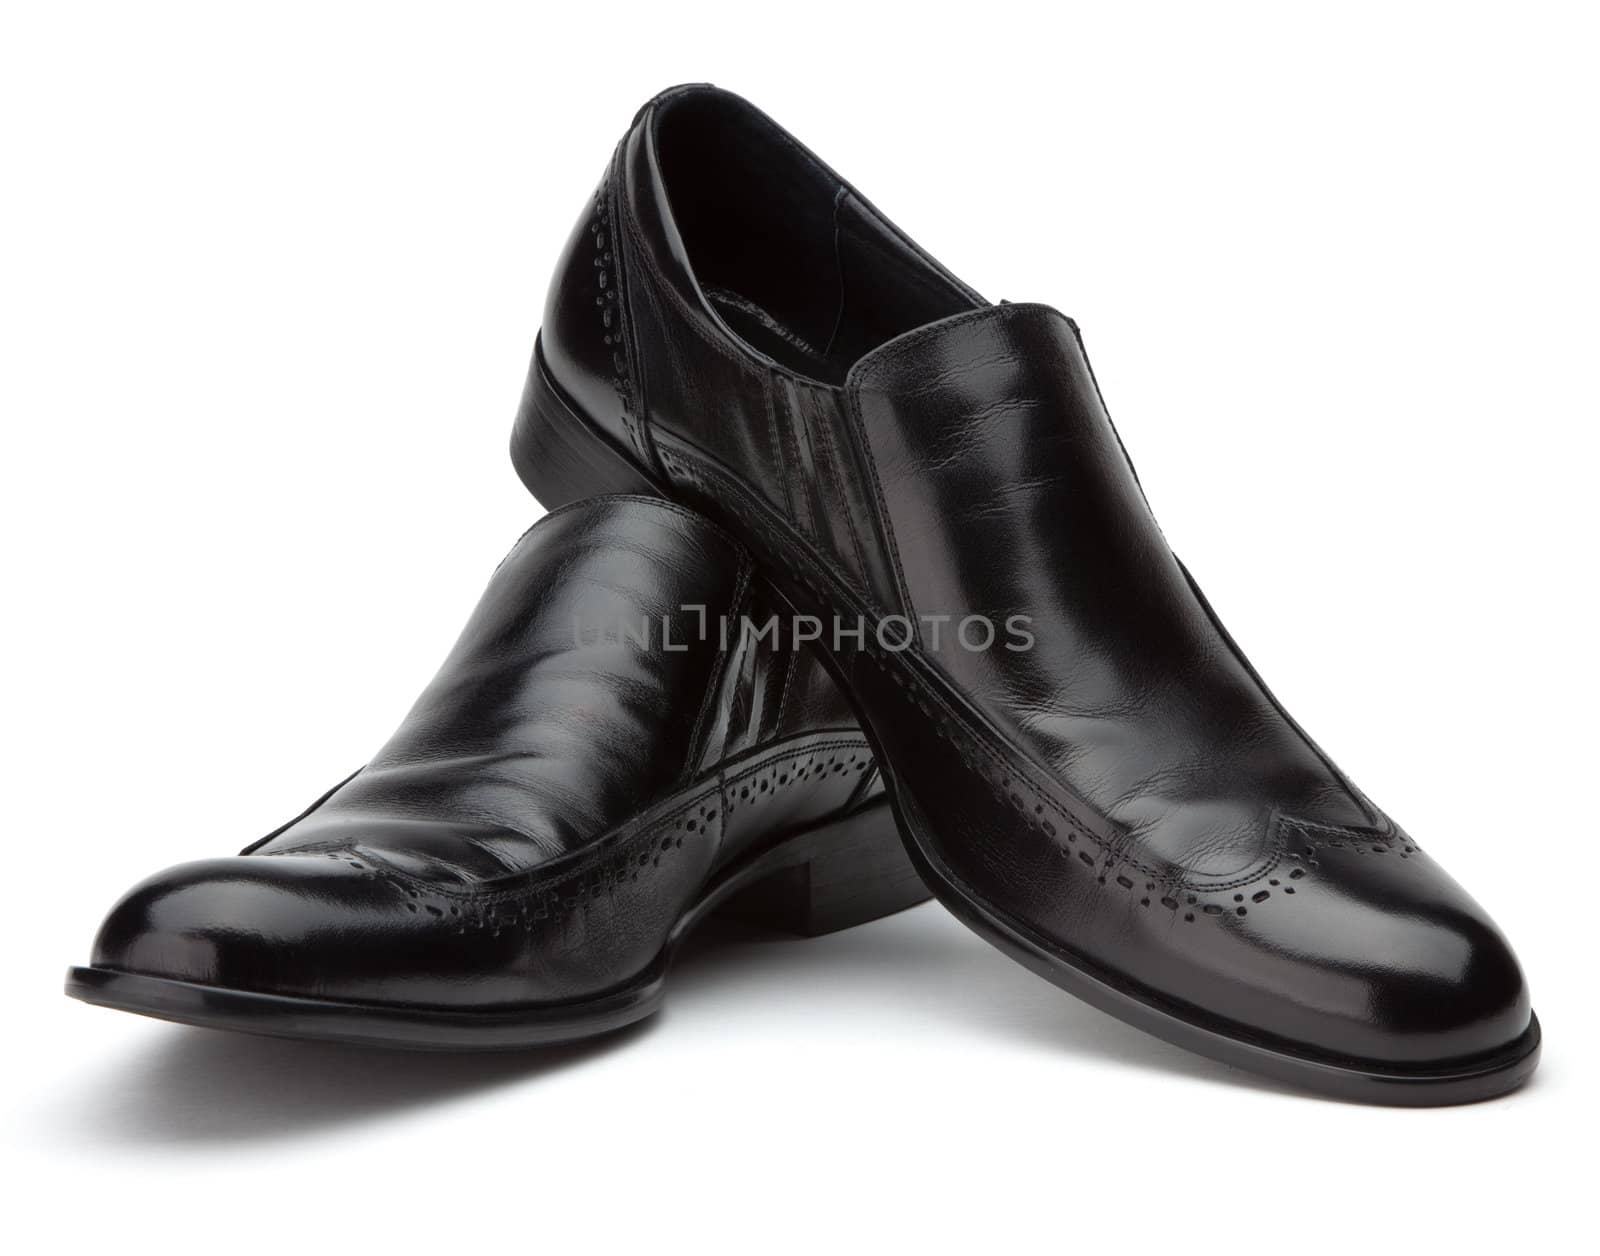 Men's black shoes by Antartis